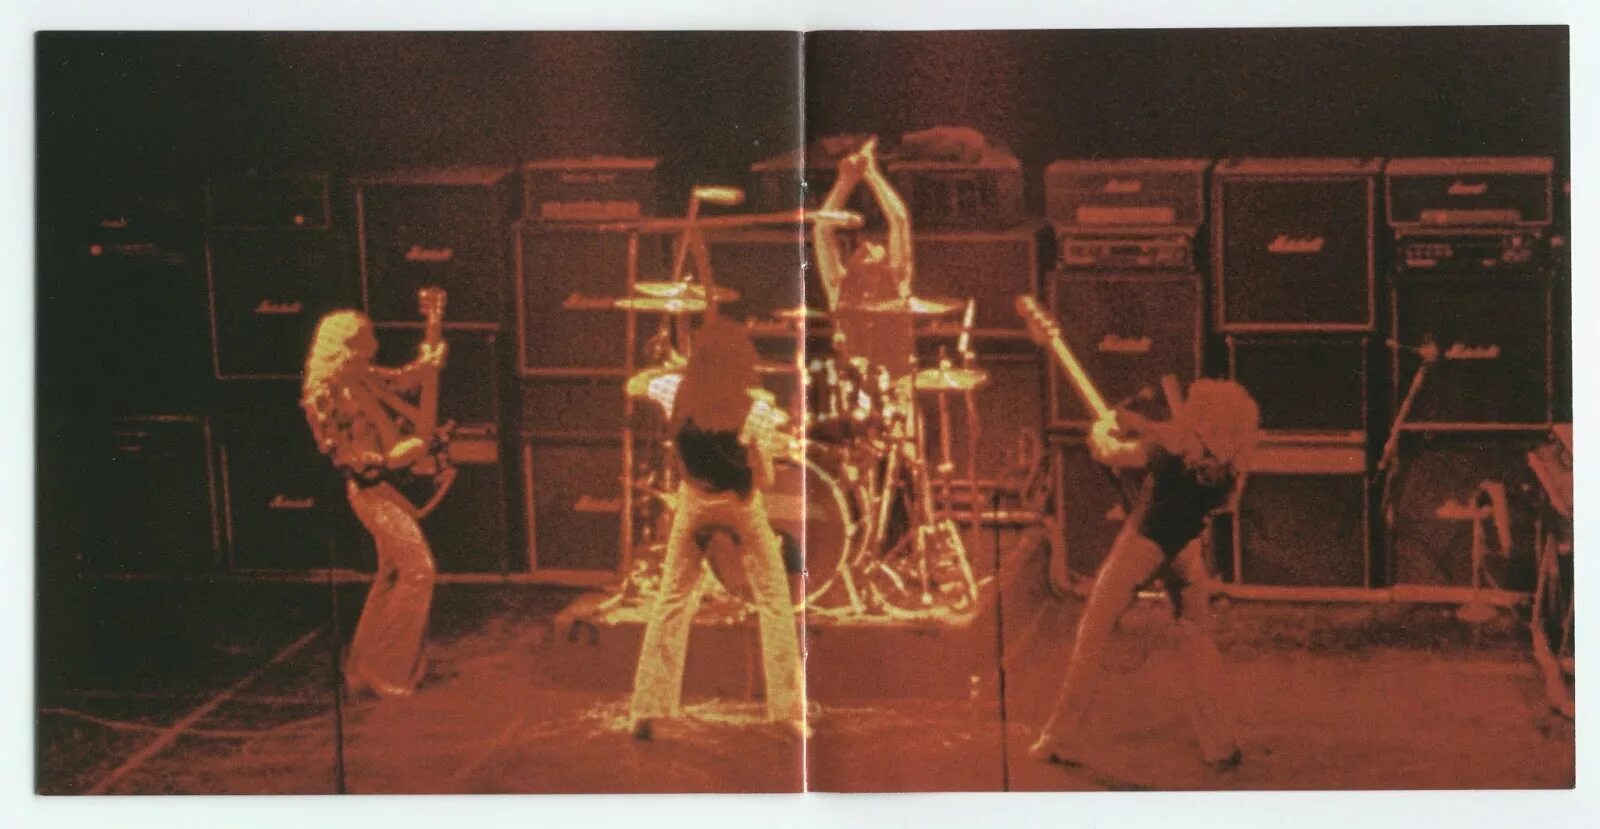 Статус кво клип. Status Quo Live обложка. Golden Earring. Status Quo 1970 - 1980 Live. Статус кво лайв Уэмбли.